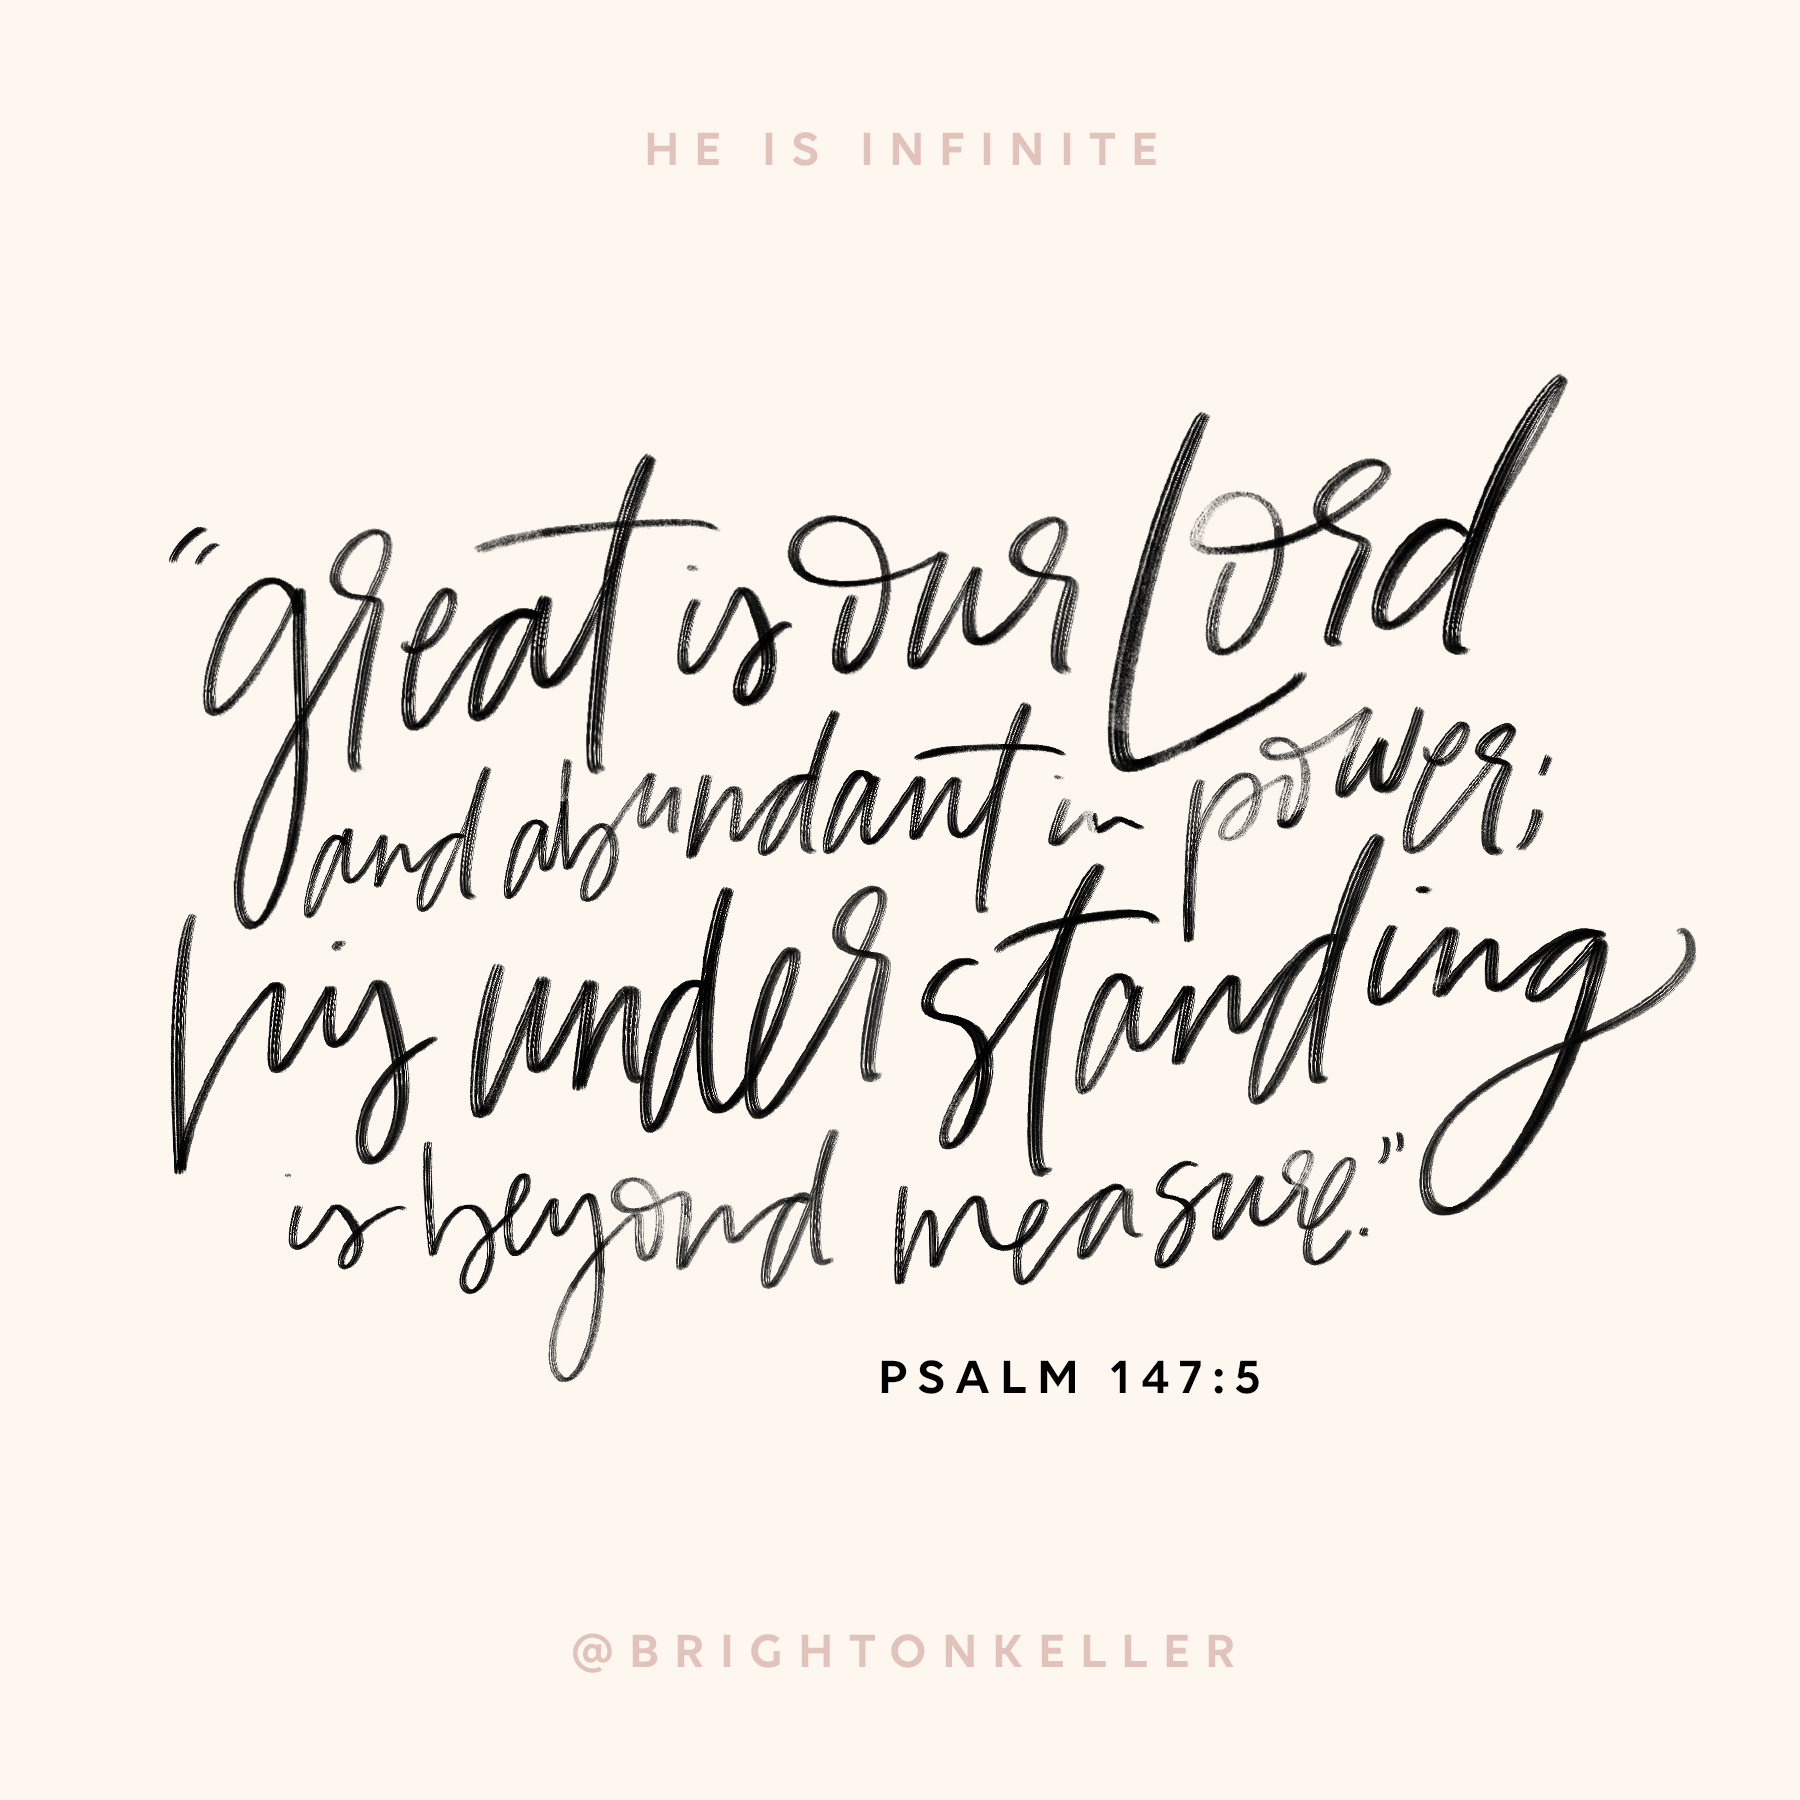 God Is Infinite Psalm 147:5